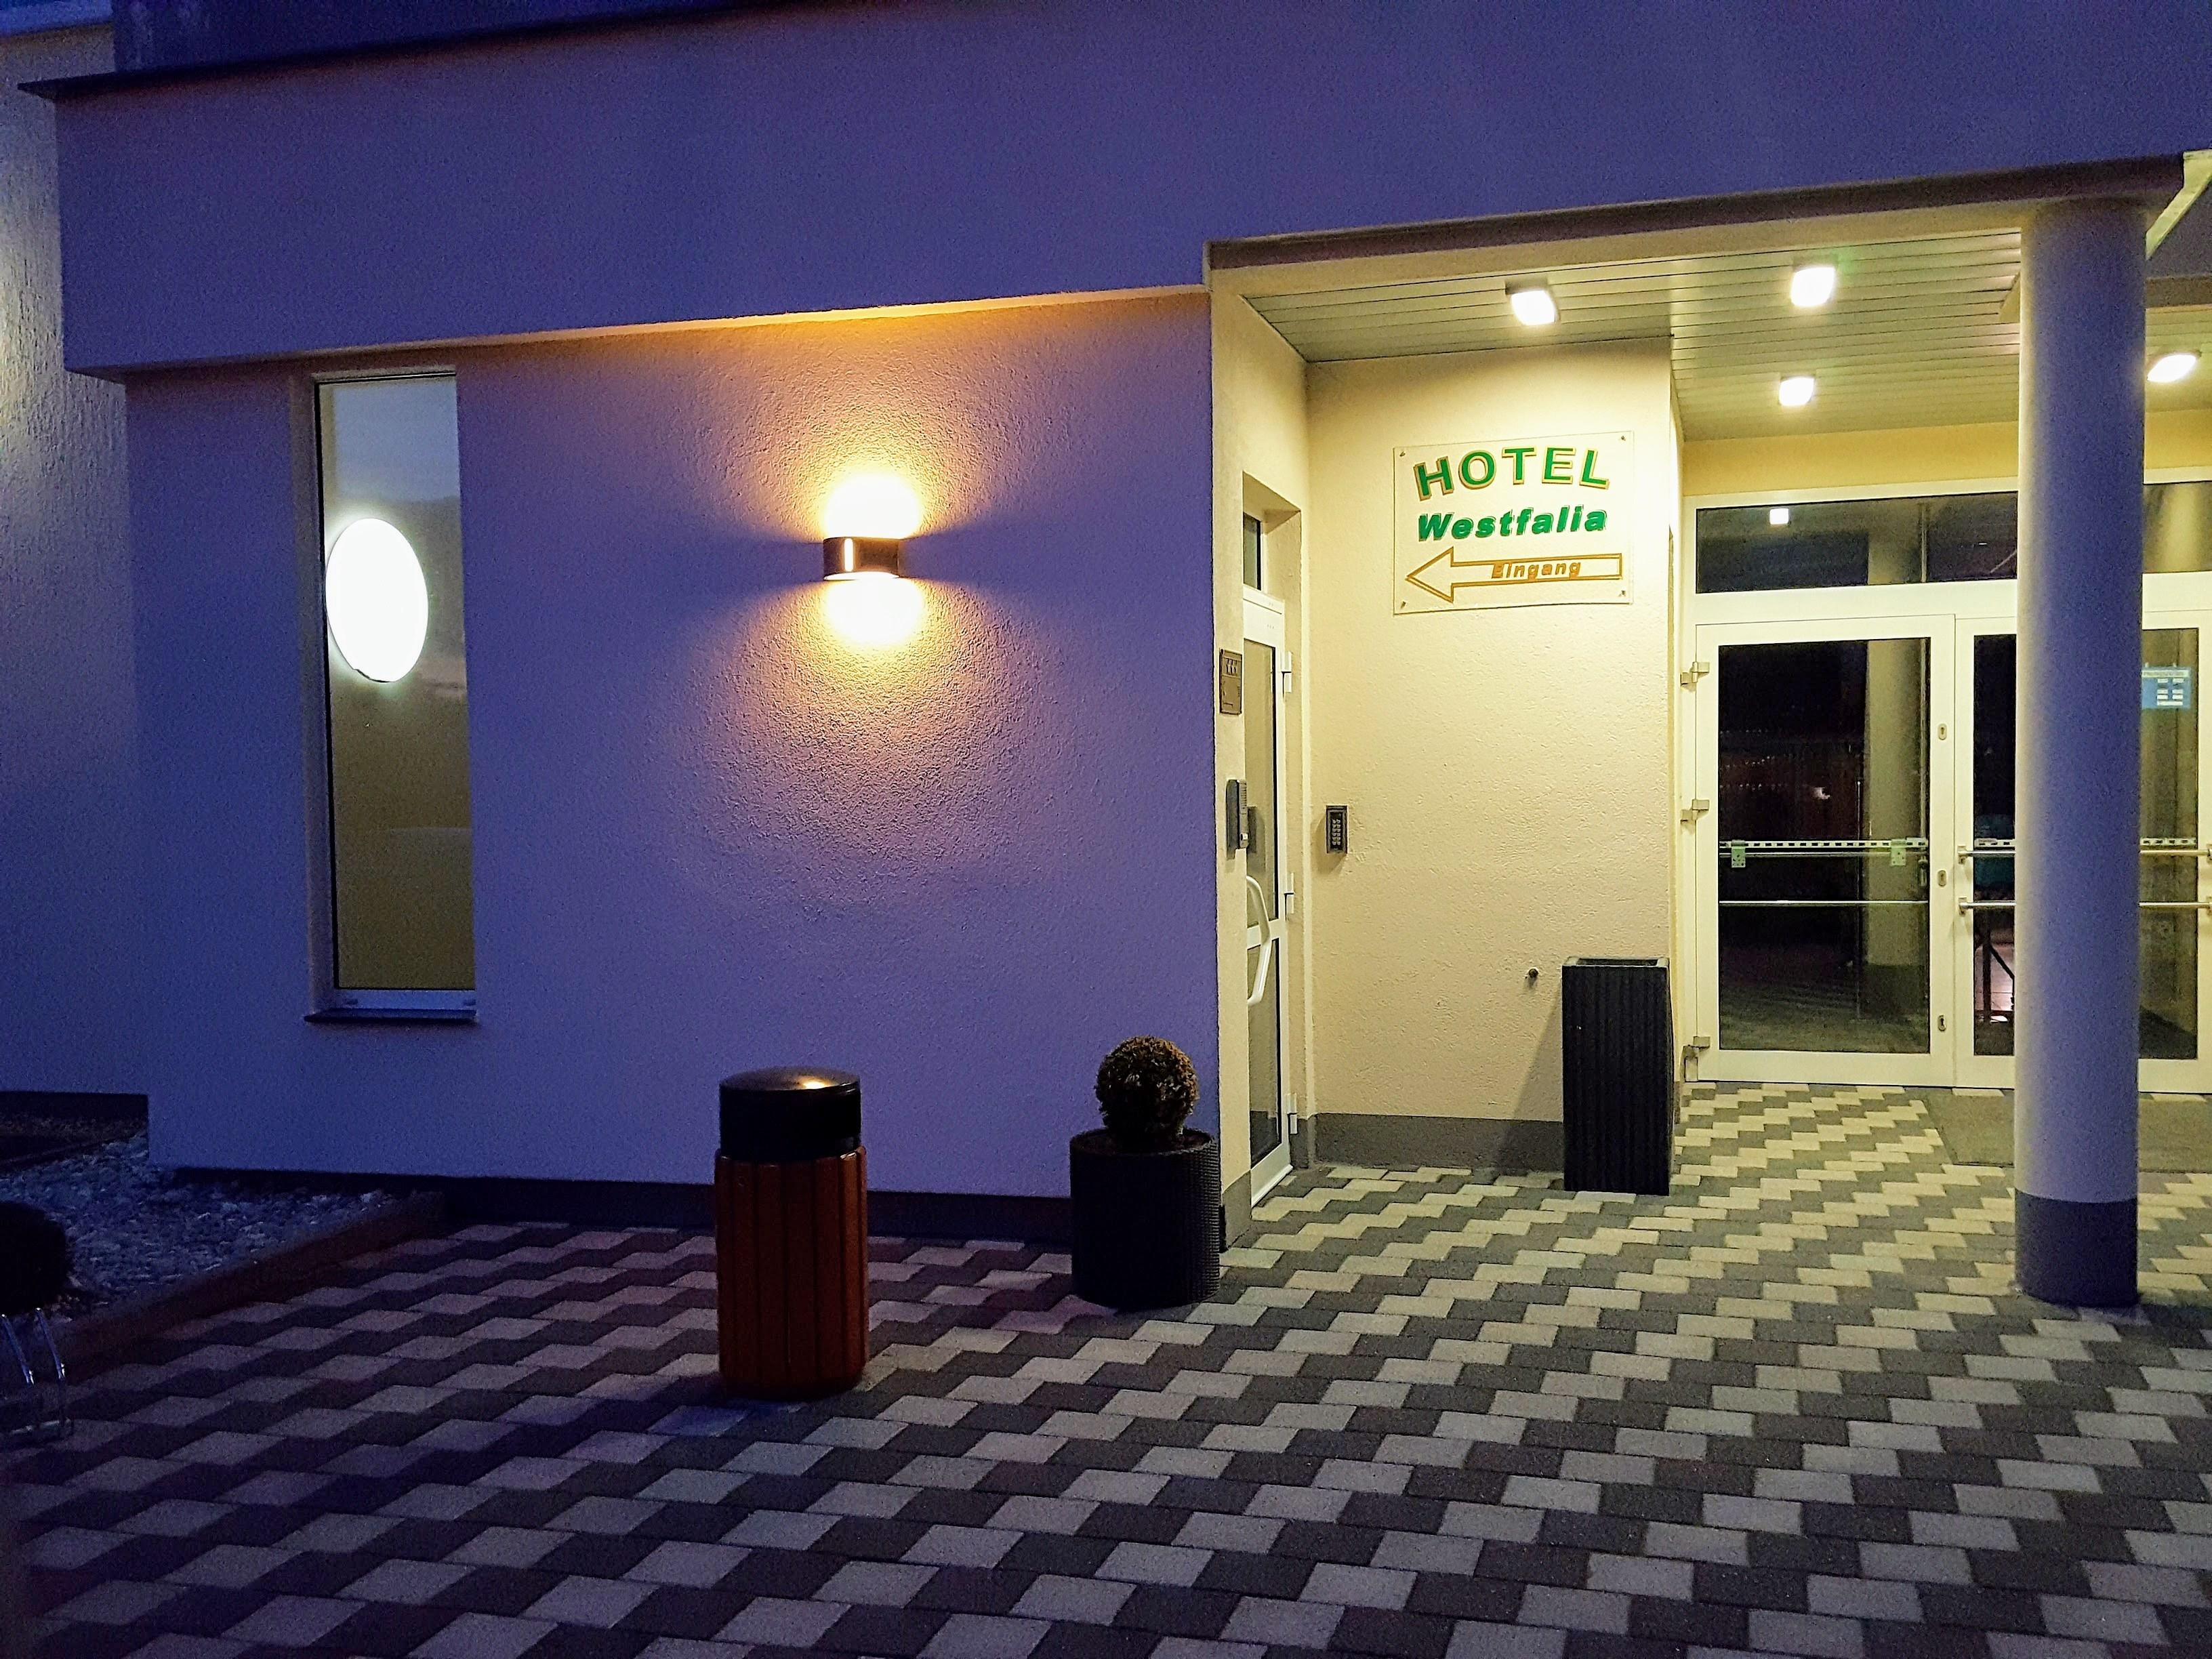 WESTFALIA STADT-GUT-HOTEL in HALLE (SAALE), Germany